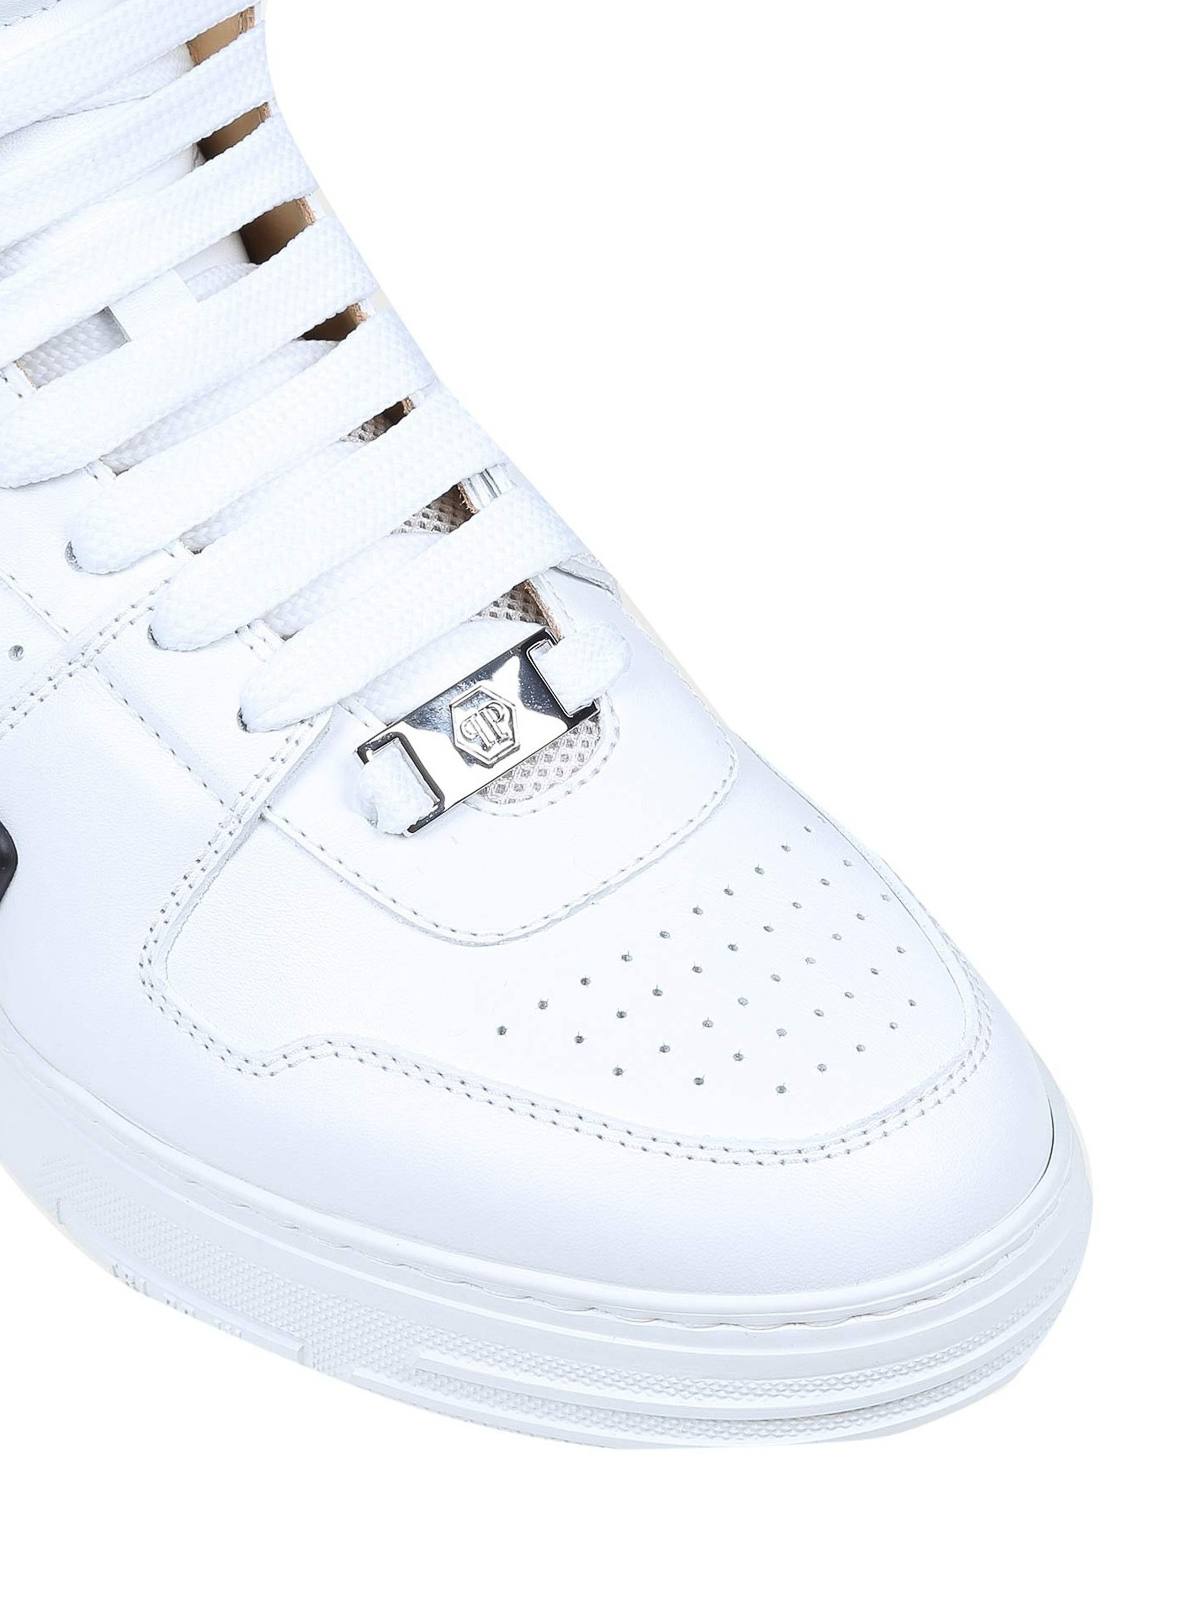 Plein - Limited Edition sneakers MSC3374PLE075N01